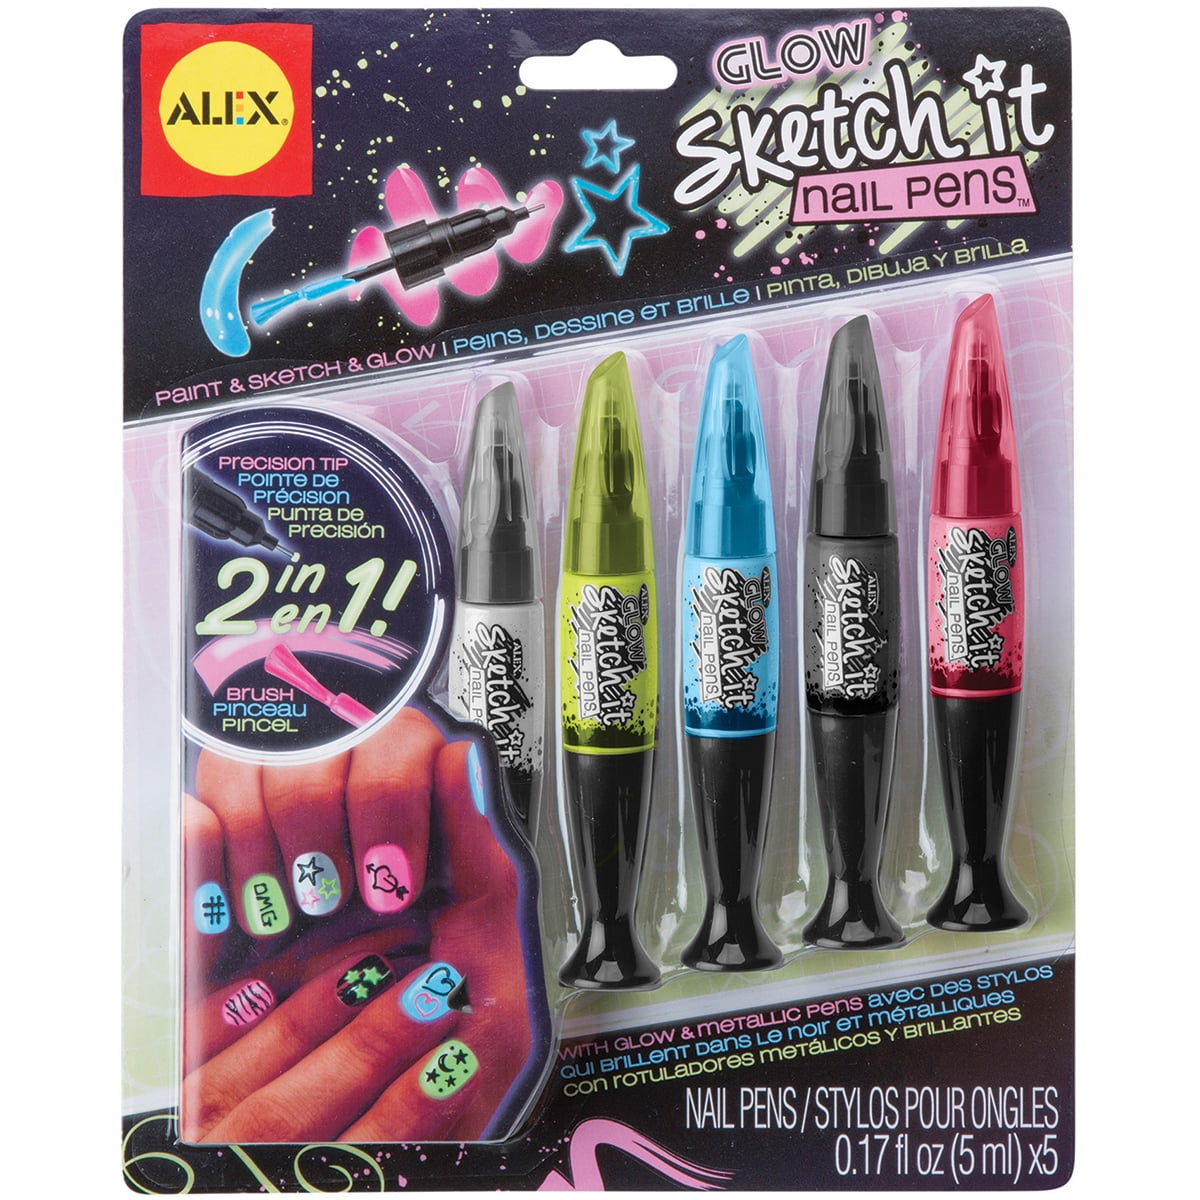 Nail Pen Salon Makeup for Kids - ALEX Toys Spa Sketch It Nail Pen Salon  Unboxing!! - YouTube